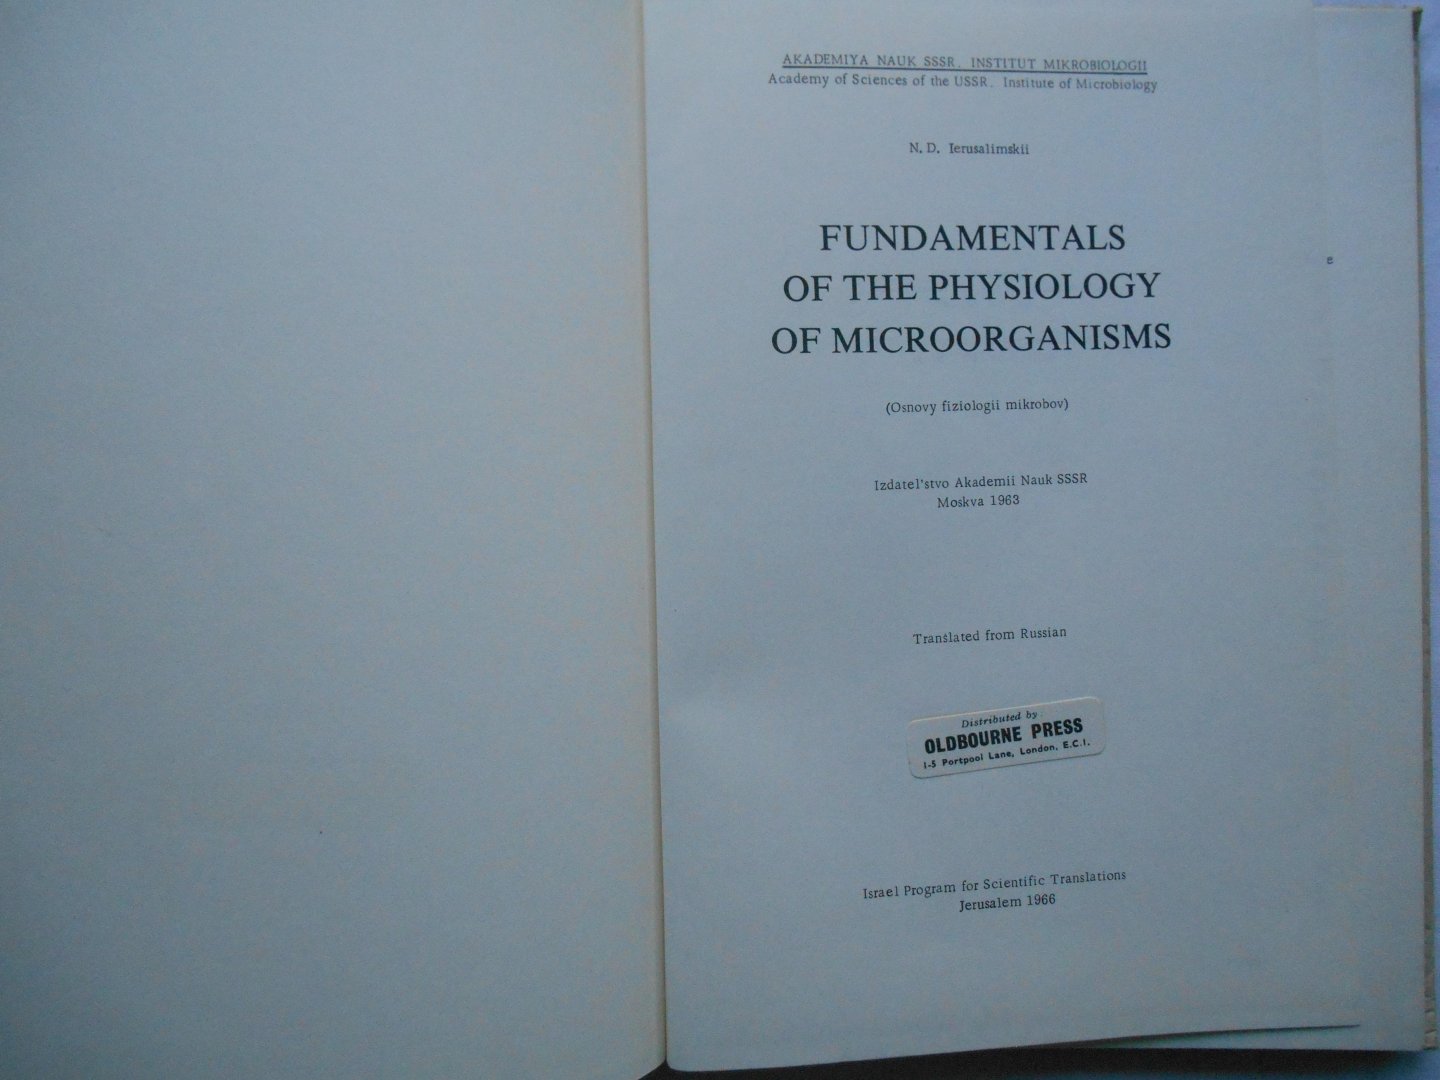 N.D. Ierusalimskii (Author), A. Mercado (Translator) - Fundamentals of the Physiology of Microorganisms